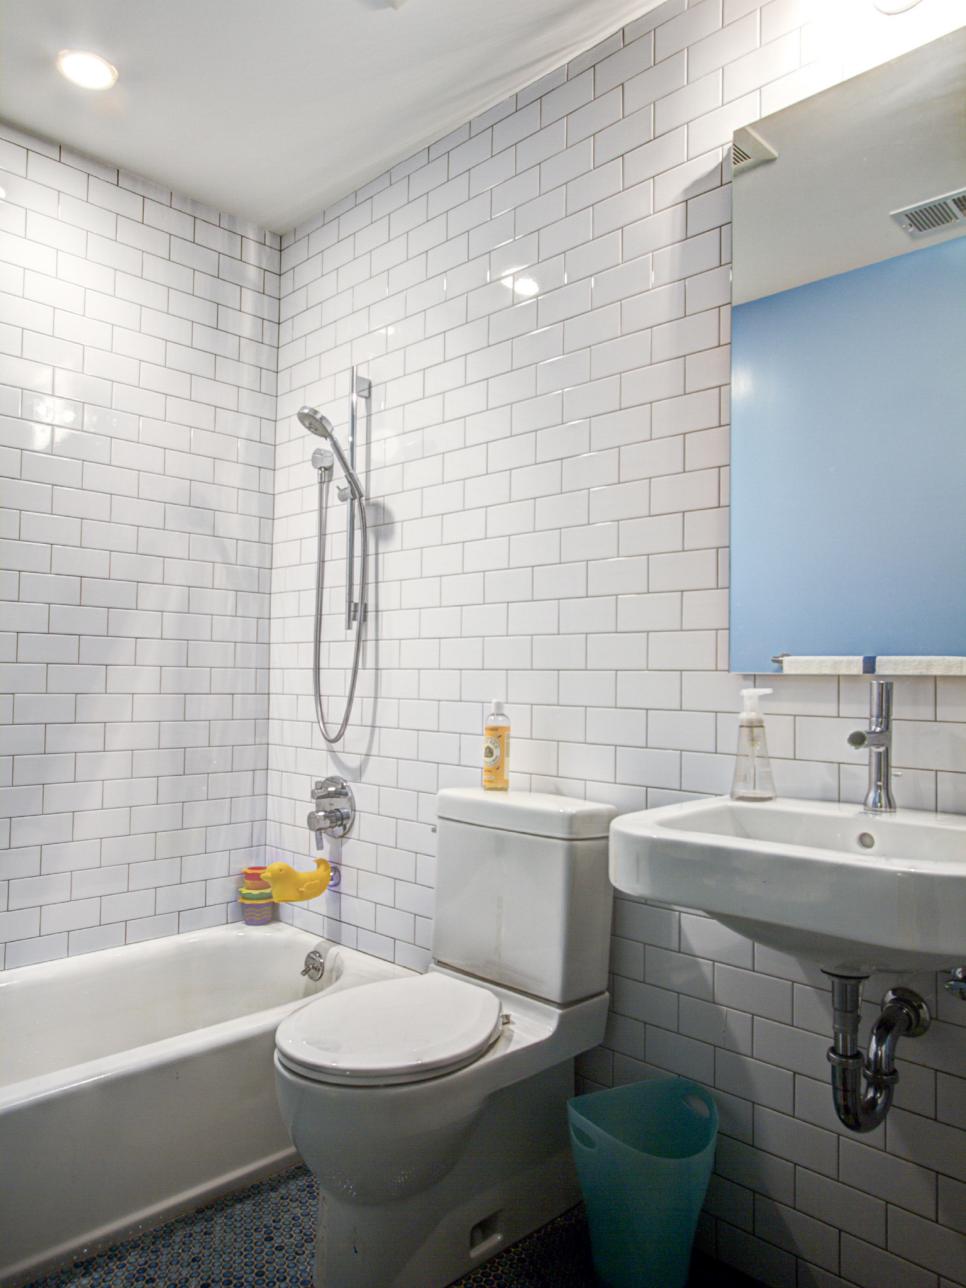 47 Stylish White Subway Tile Bathroom Ideas for Your Reference ROUNDECOR Bathroom tile